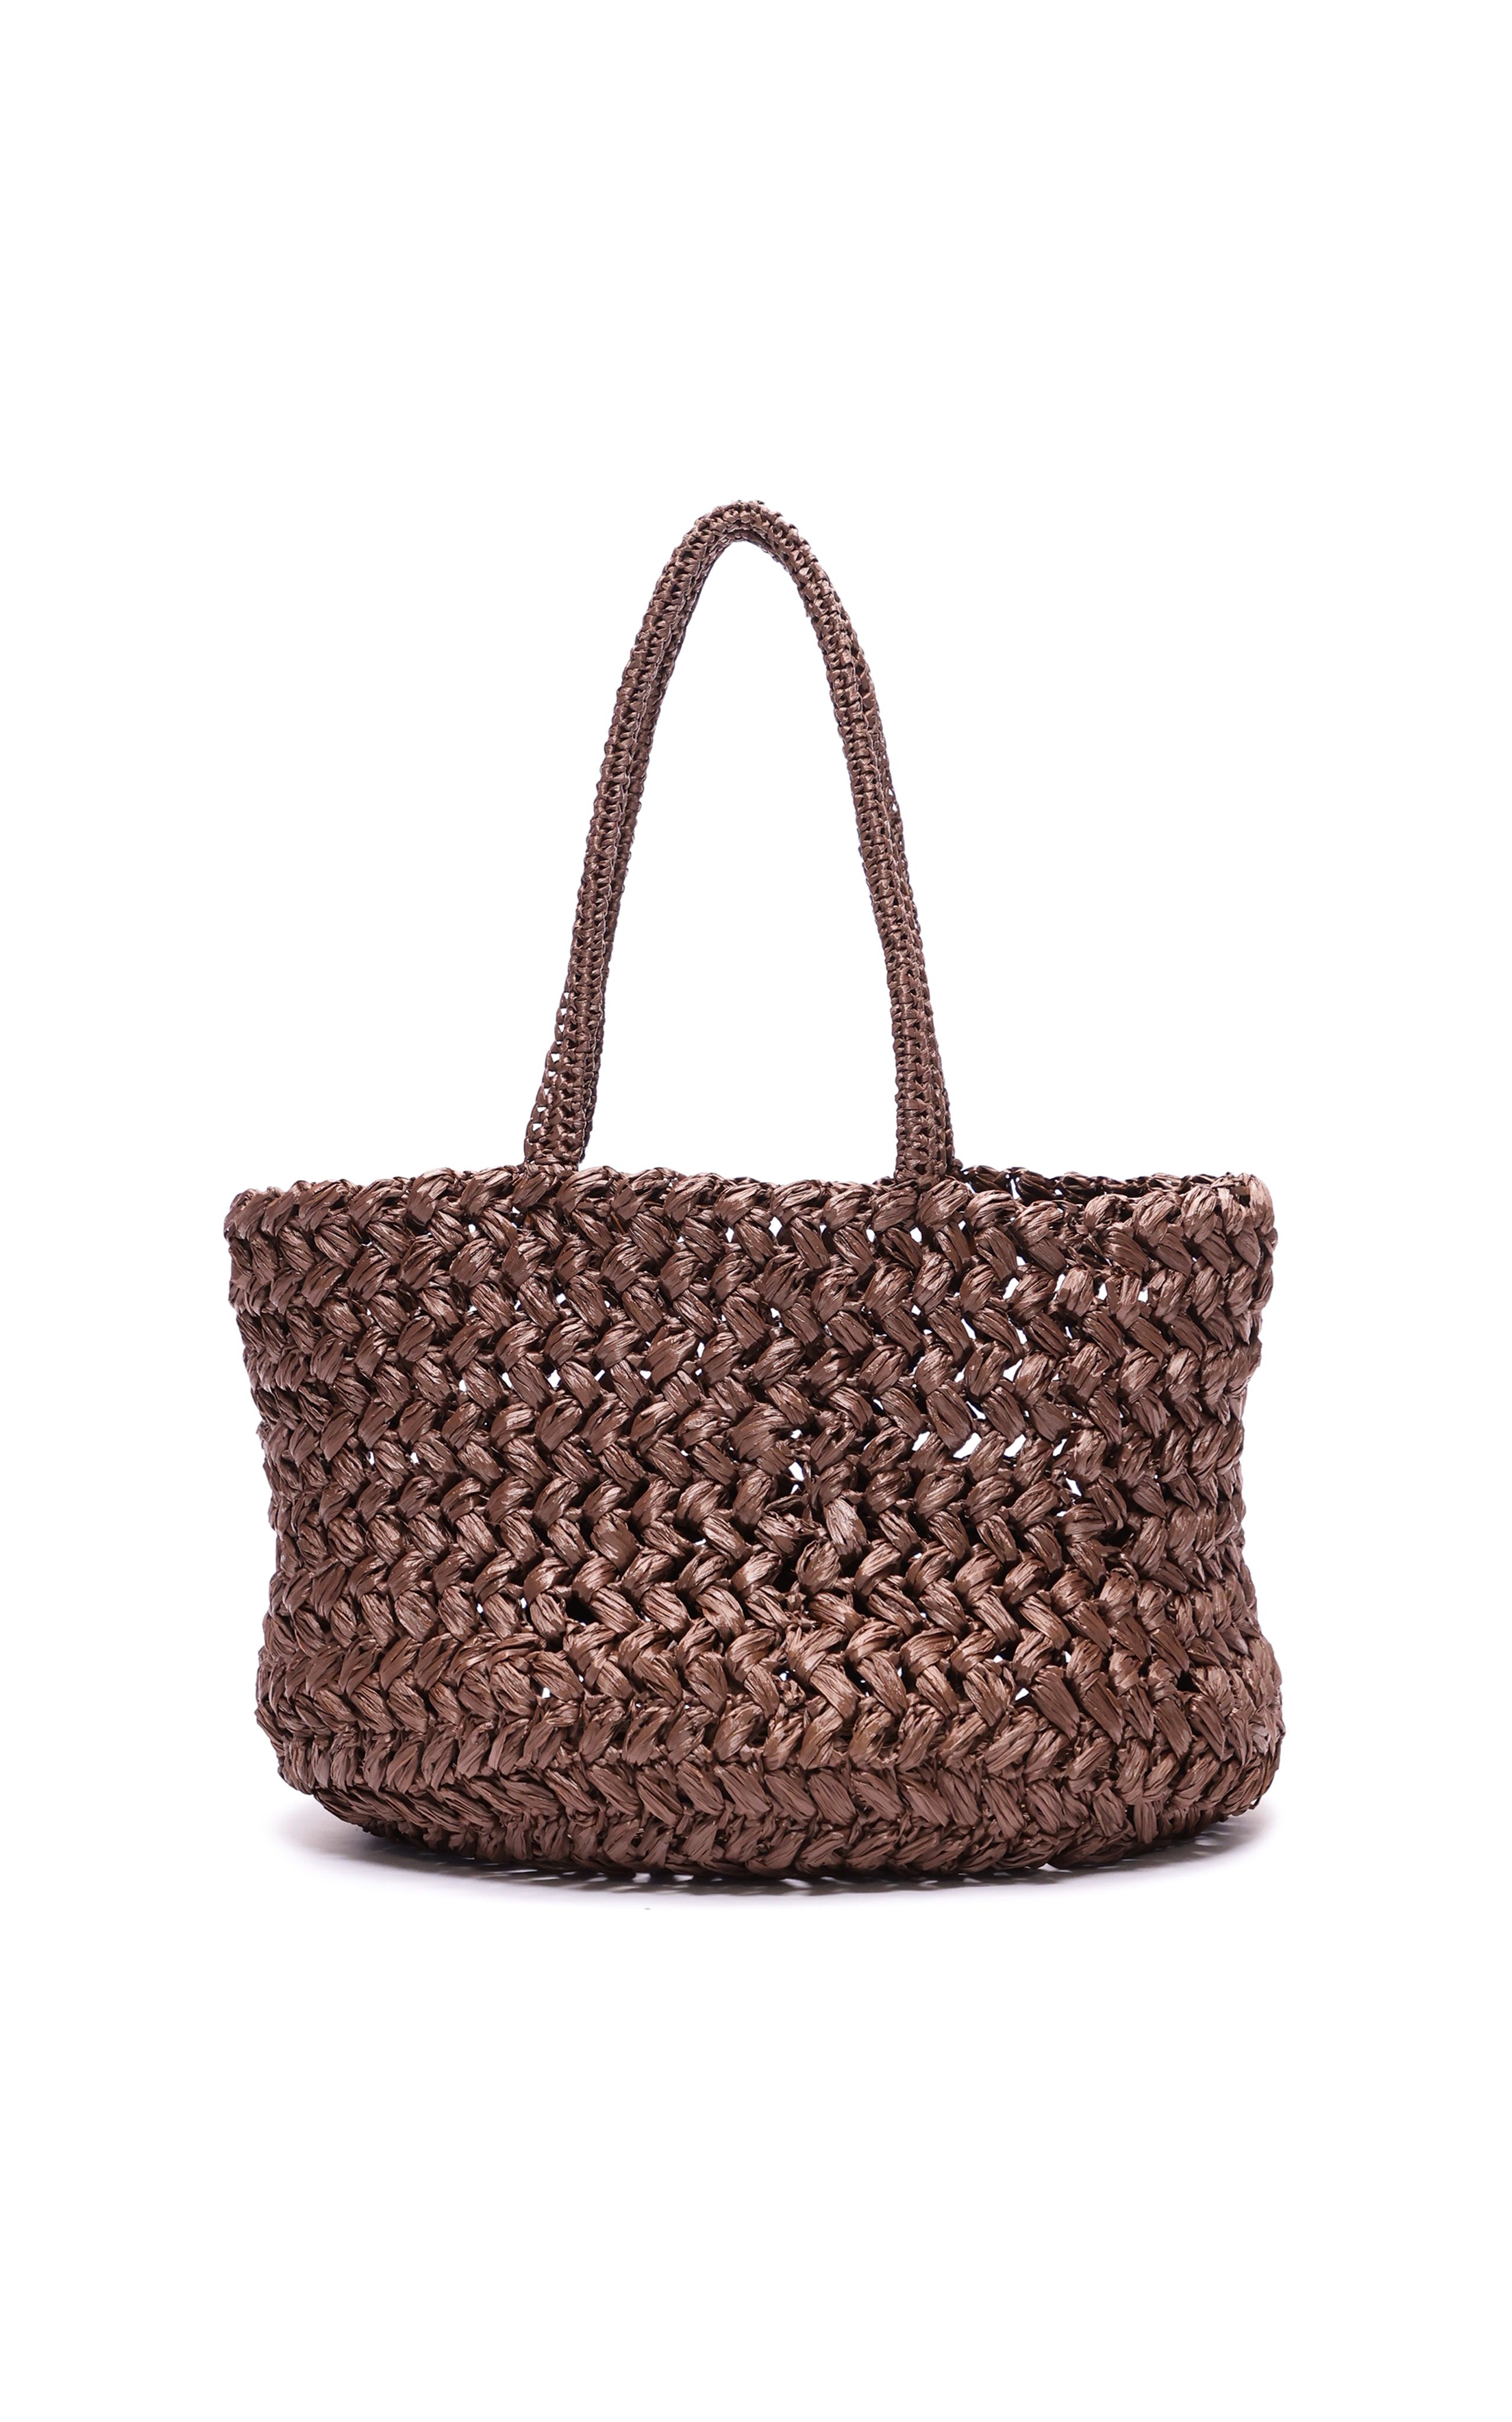 Designer Basket Bags at the Best Price | Henrietta Spencer